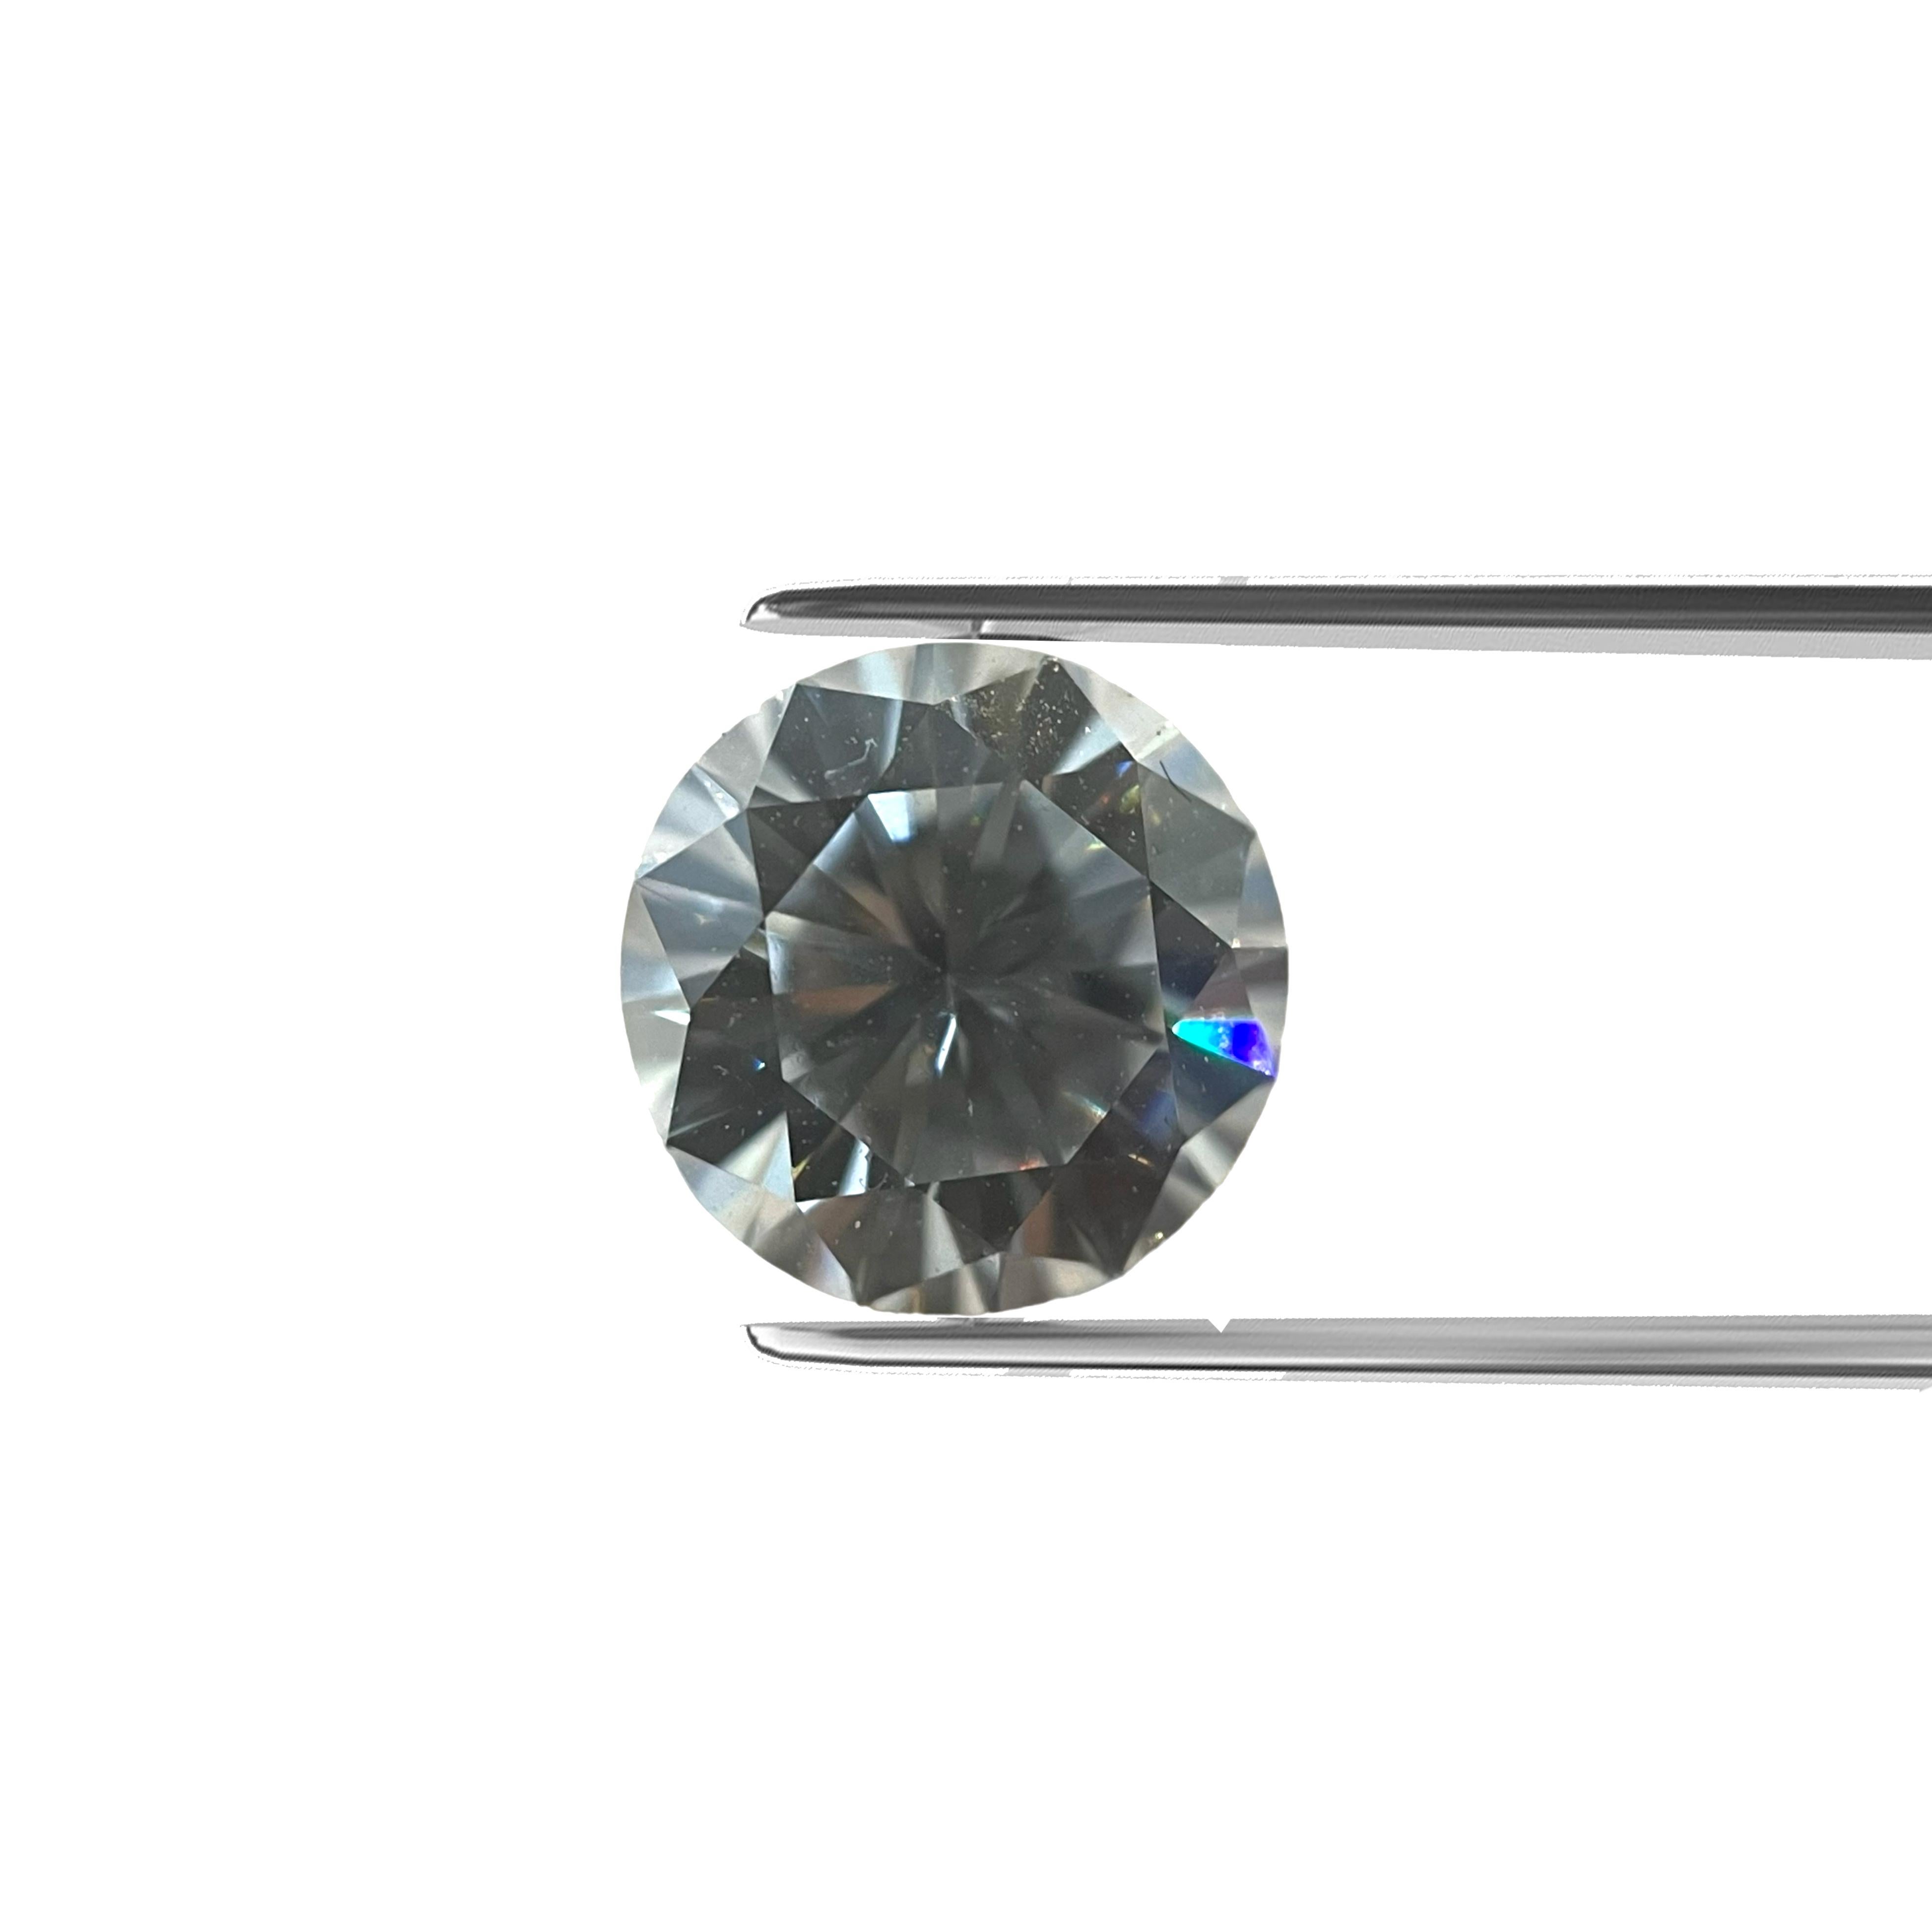 ITEM DESCRIPTION

ID #: NYC56704
Stone Shape: ROUND BRILLIANT
Diamond Weight: 1.00ct
Clarity: VVS2
Color: G
Cut:	Good
Measurements: 6.33 - 6.41 x 3.99 mm
Depth %:	62.7%
Table %:	61%
Symmetry: Good
Polish: Very Good
Fluorescence: Medium